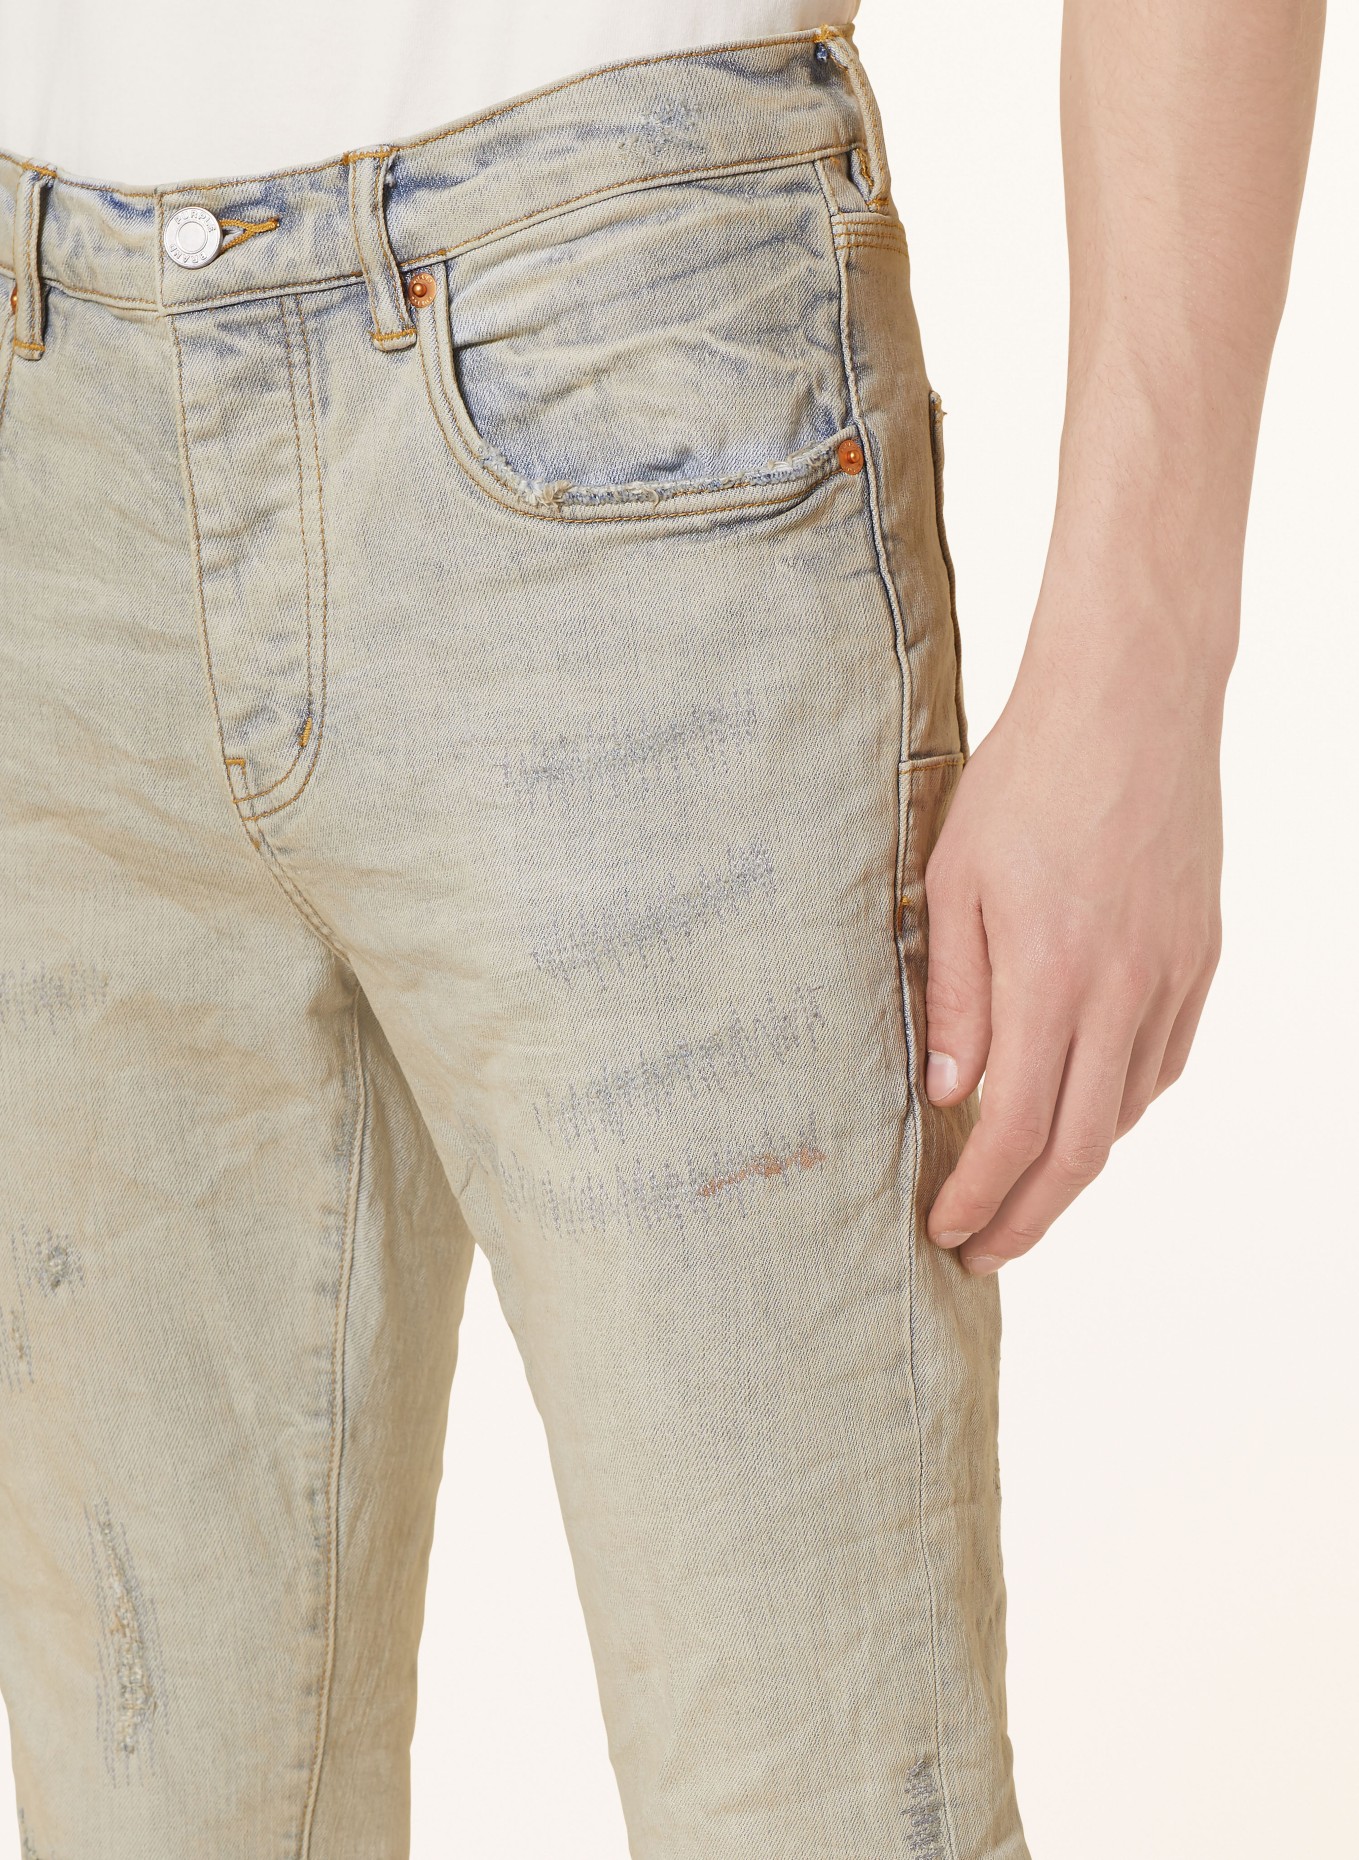 PURPLE BRAND Jeans P001 Skinny Fit, Farbe: Superlight (Bild 5)